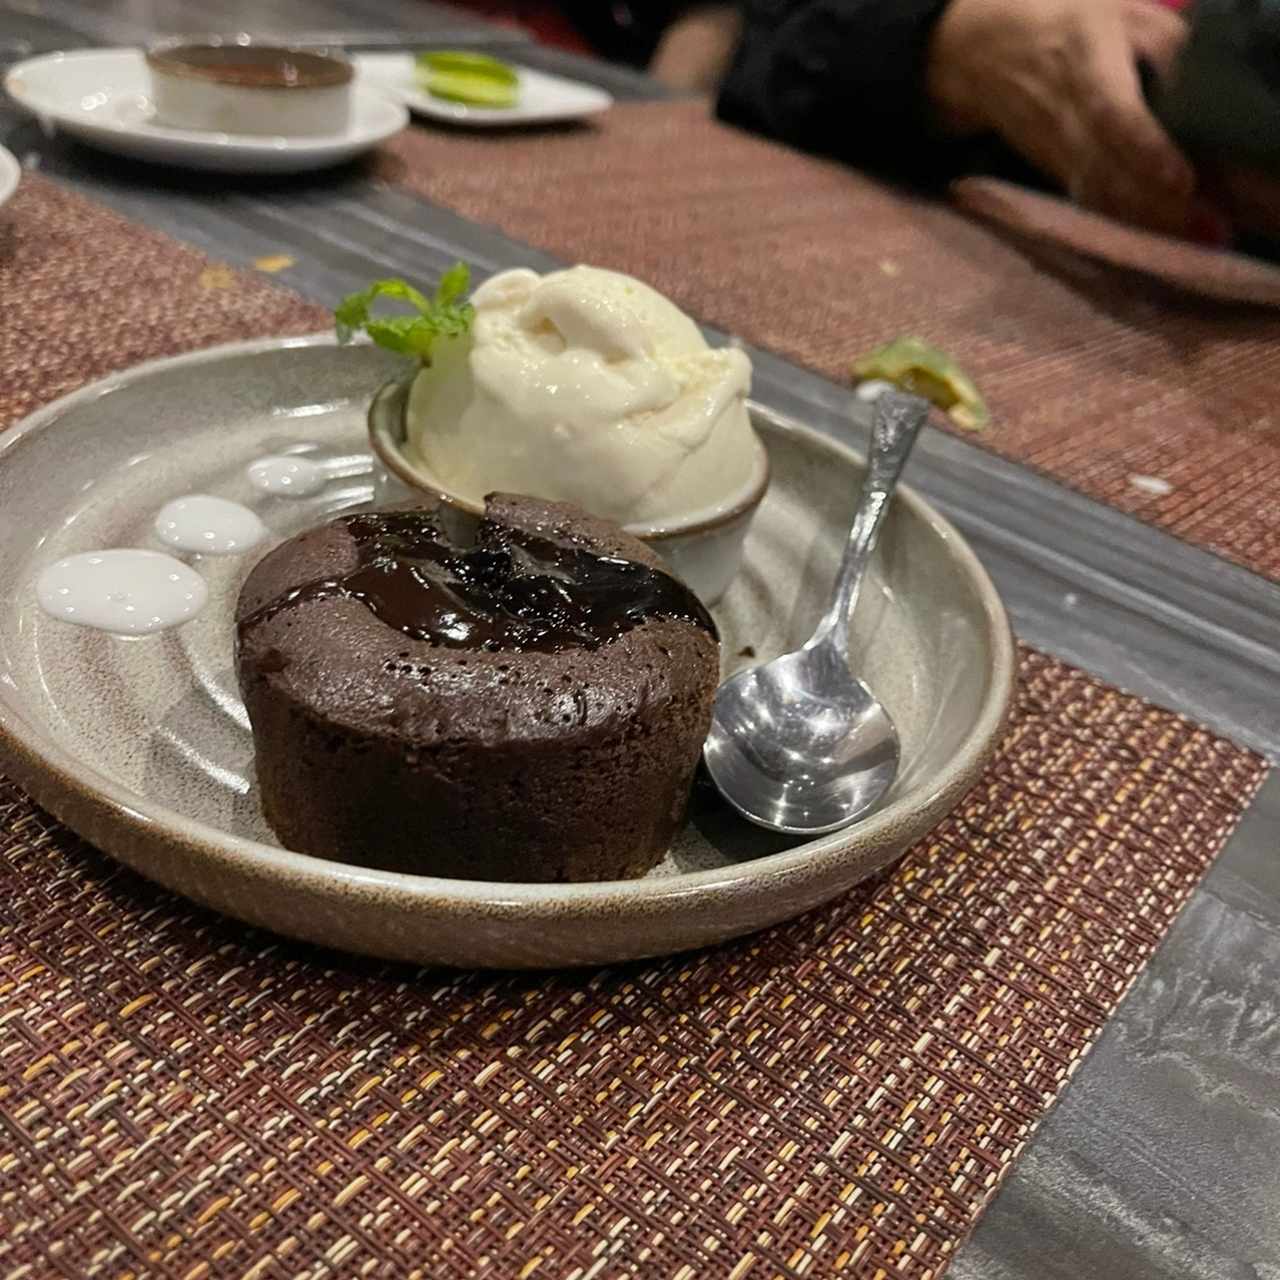 CHOCOLATE CAKE & ICE CREAM